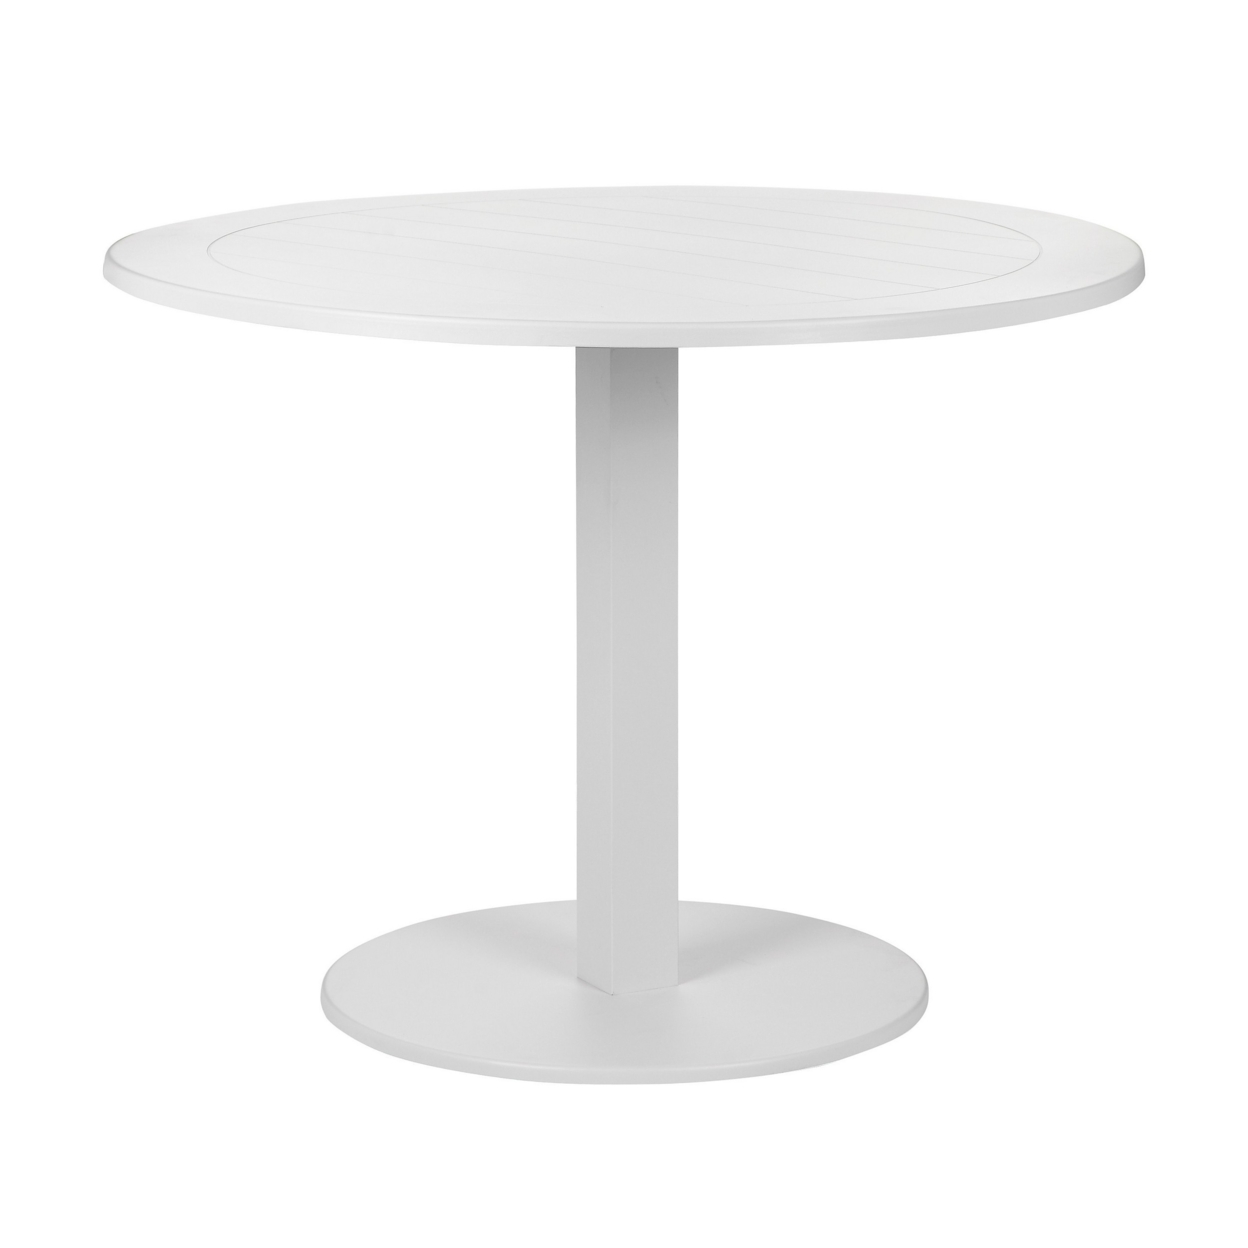 Keli 35 Inch Round Dining Table, White Aluminum Frame, Foldable Design- Saltoro Sherpi